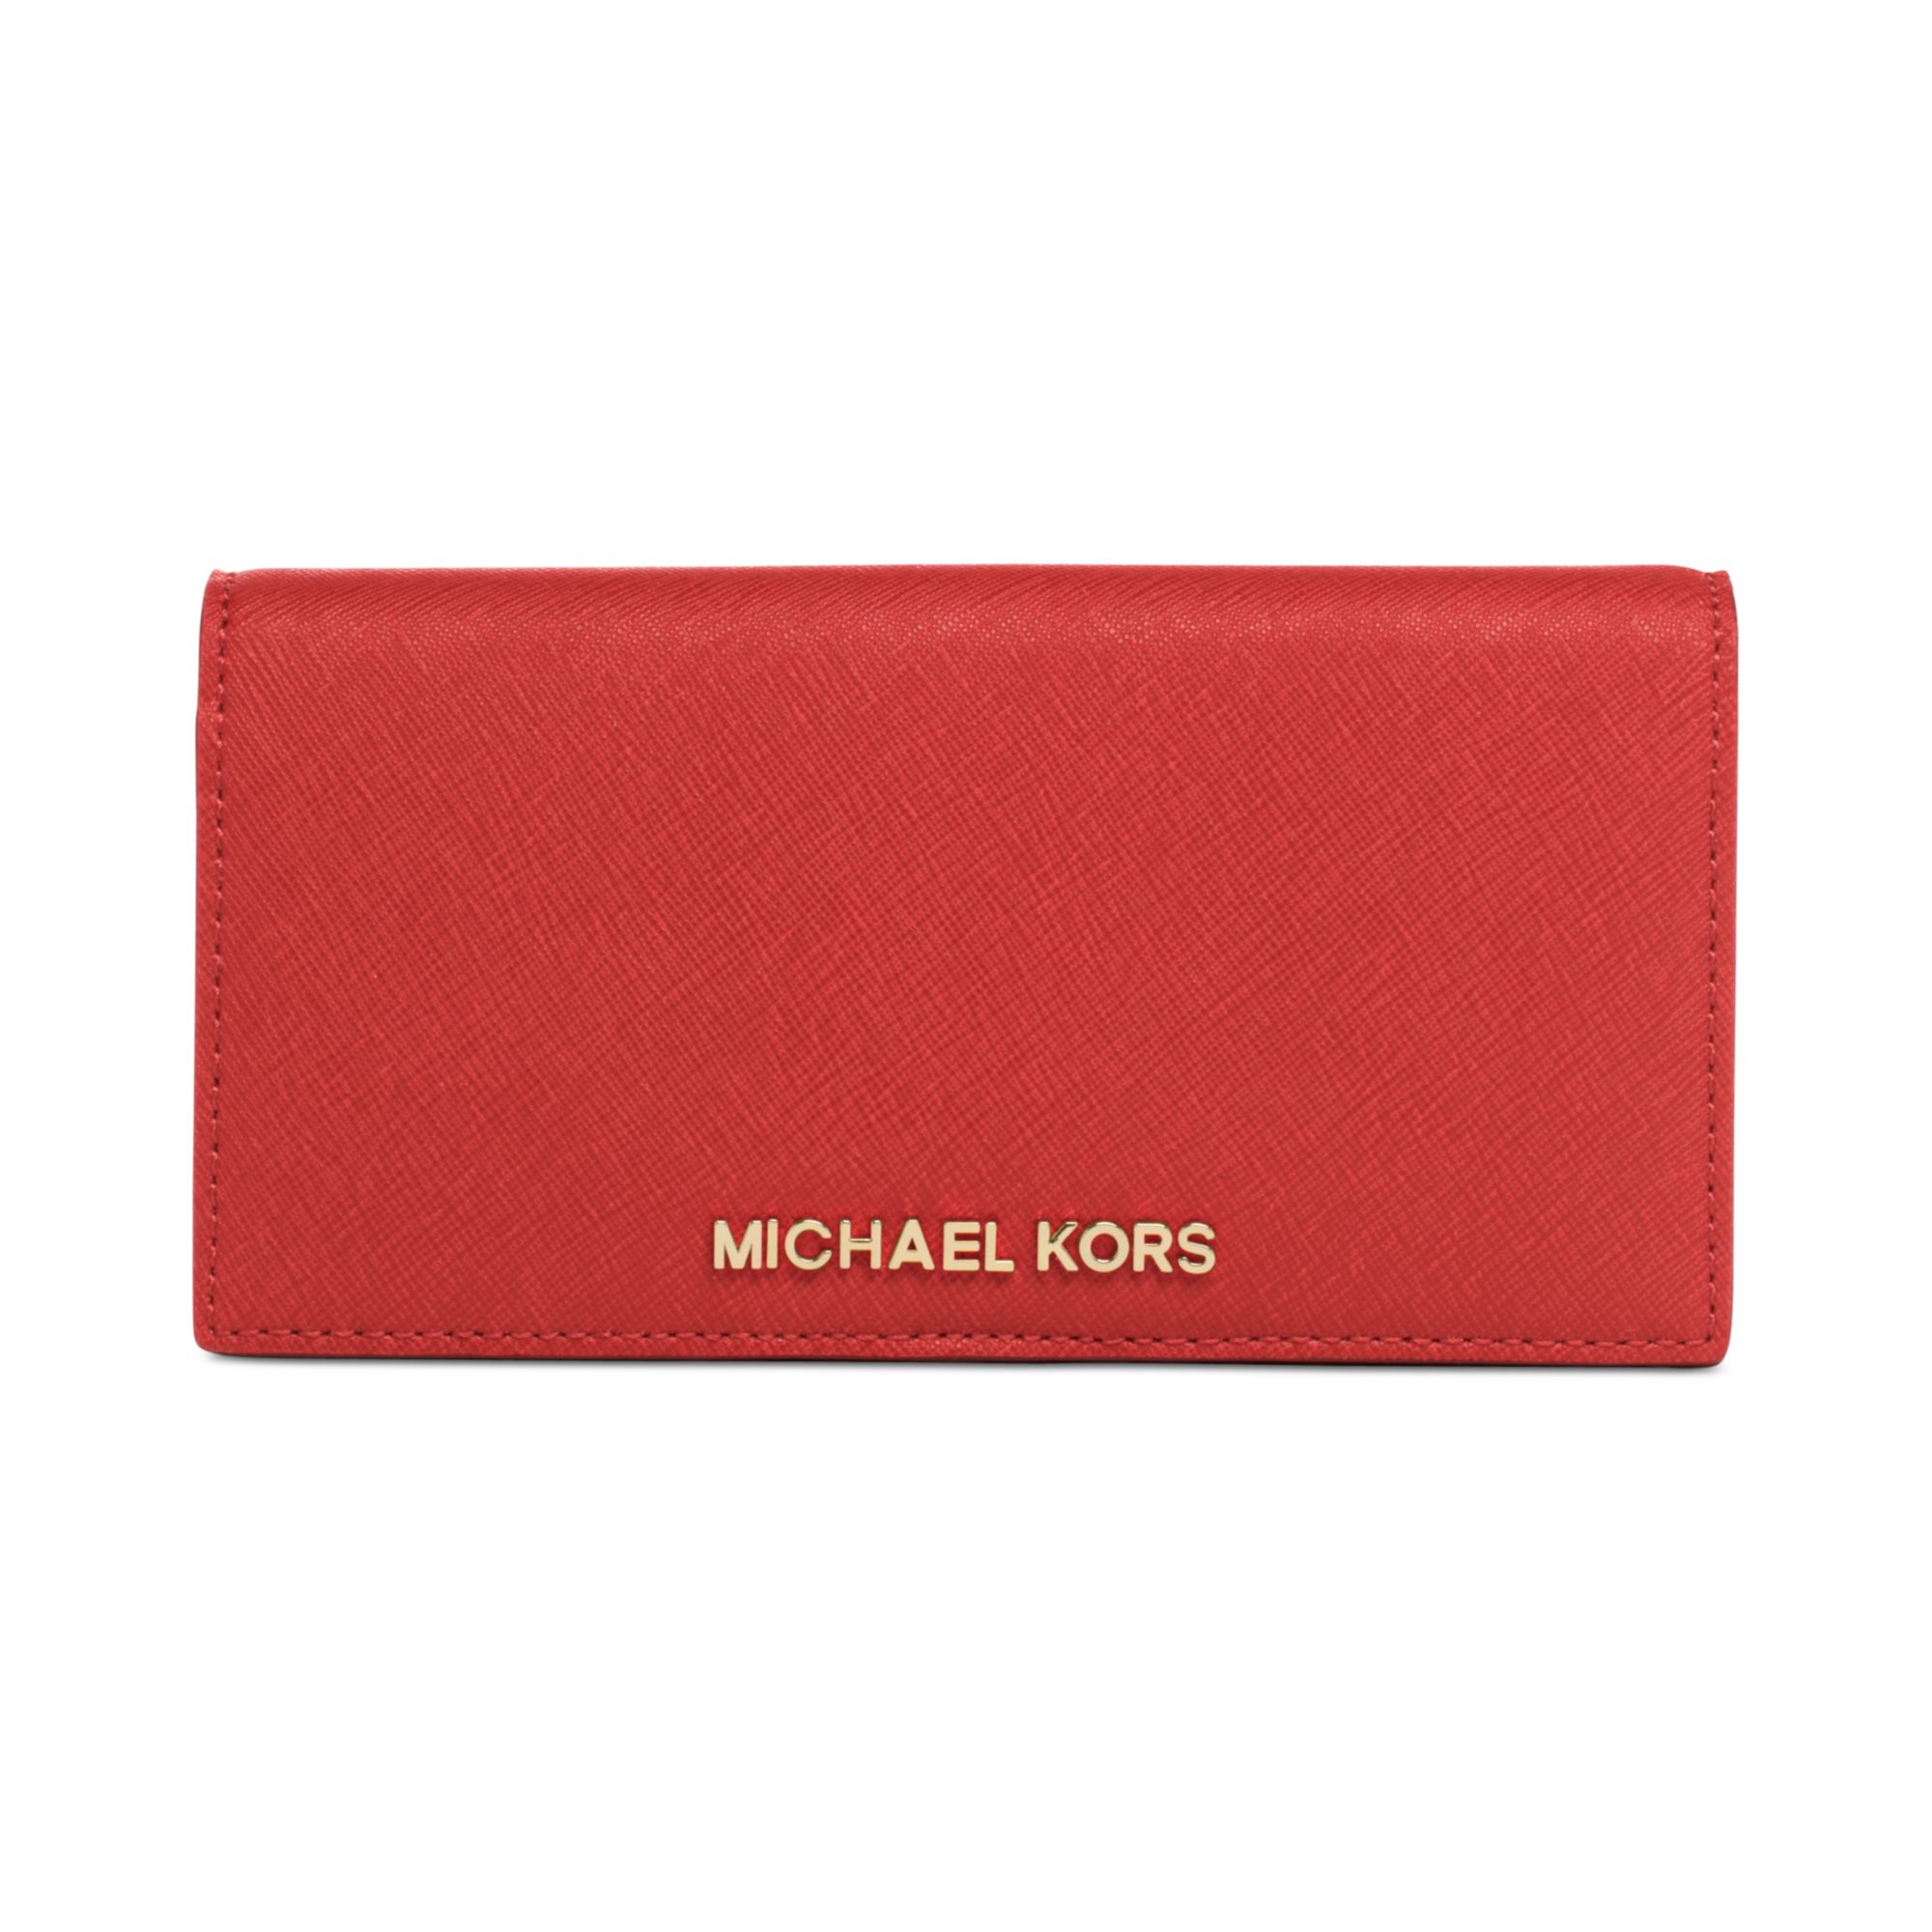 Lyst - Michael kors Michael Jet Set Travel Large Slim Wallet in Red